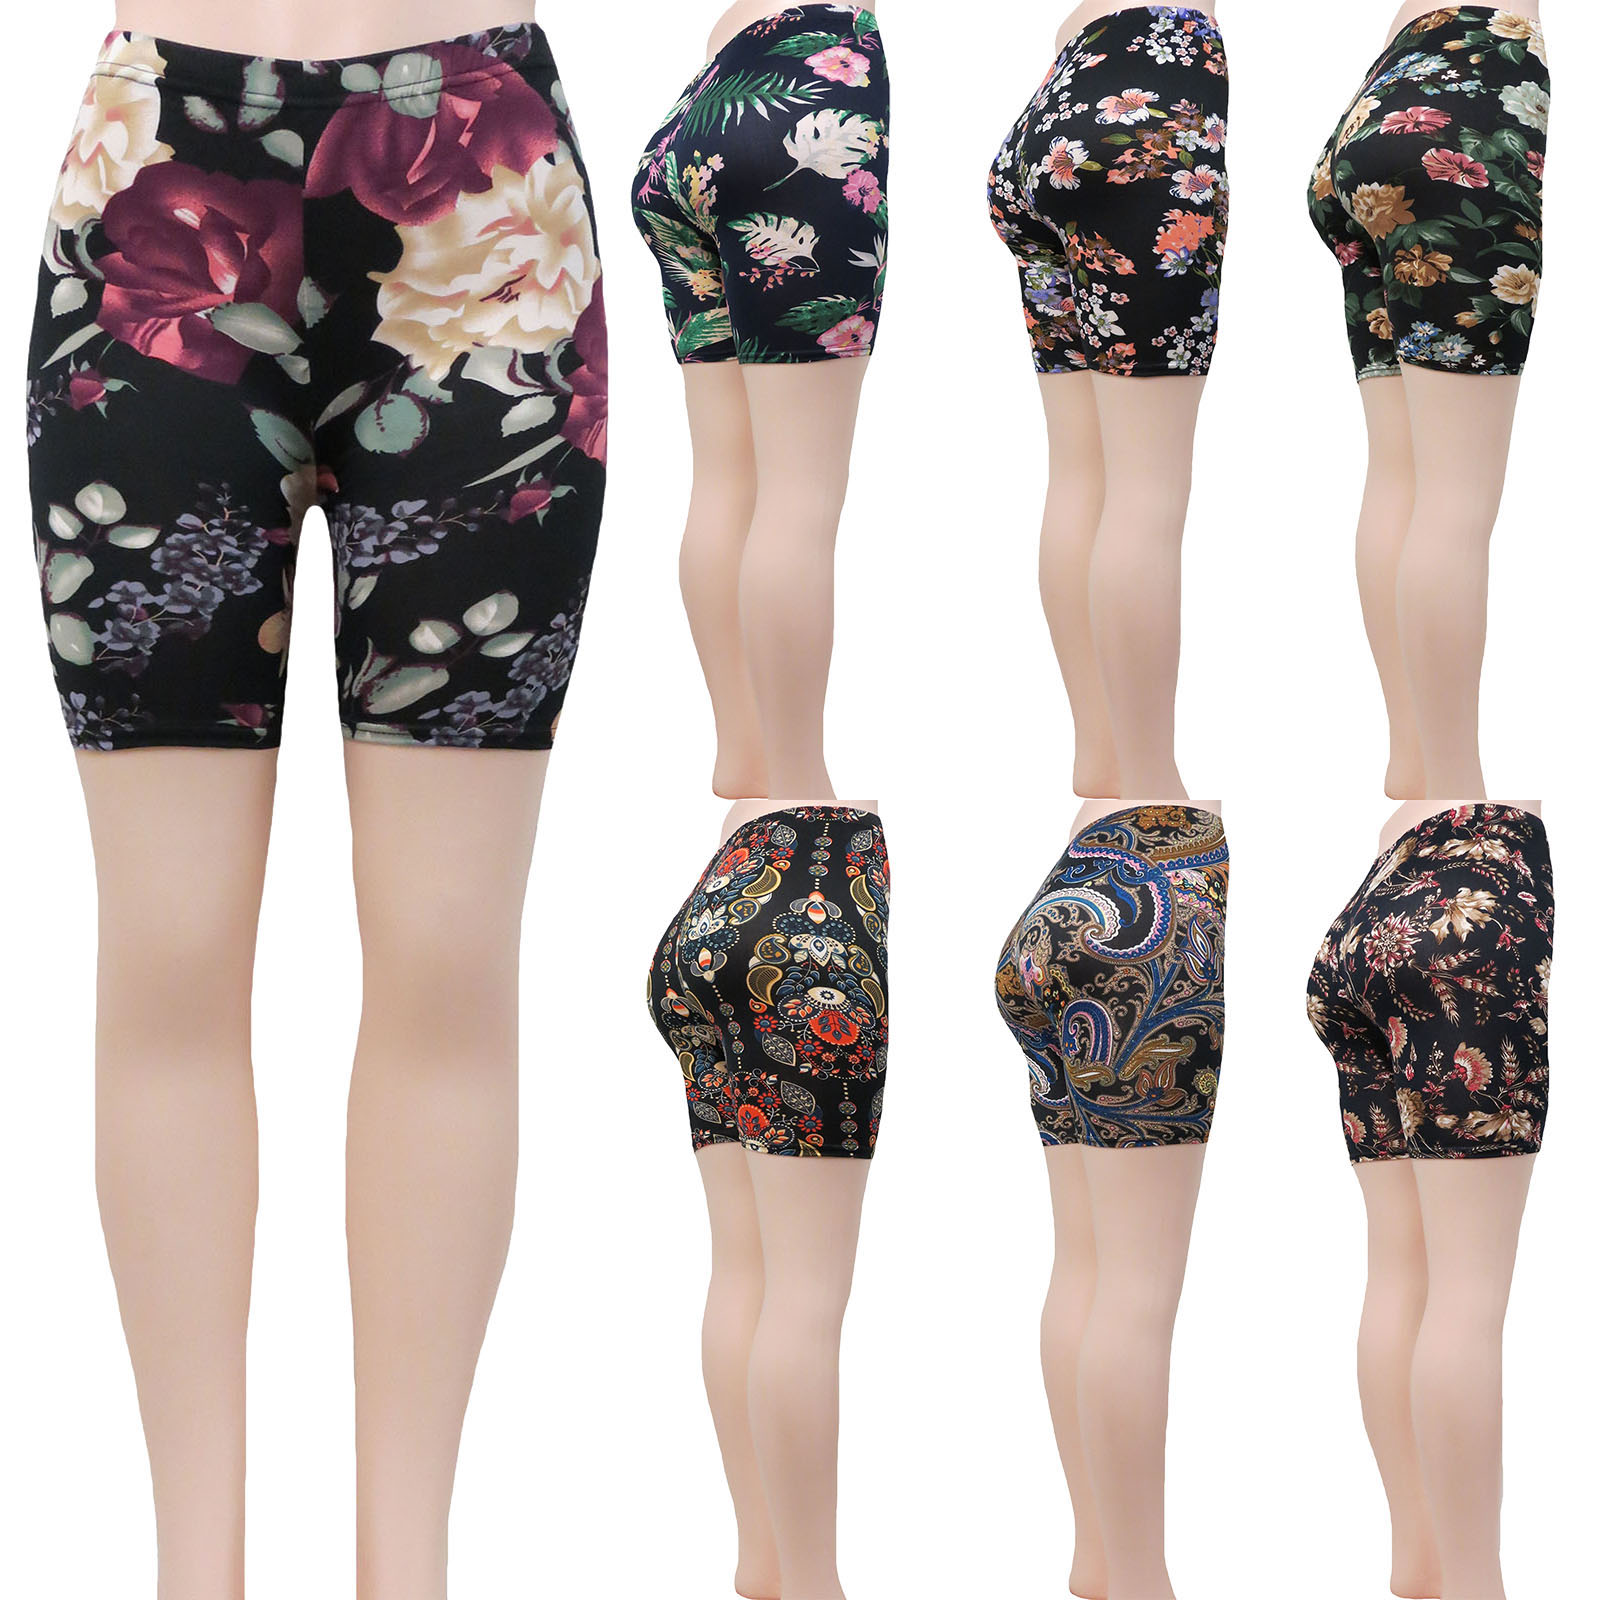 Women's Legging BIKER Shorts w/ Floral Print - One Size Fits Most